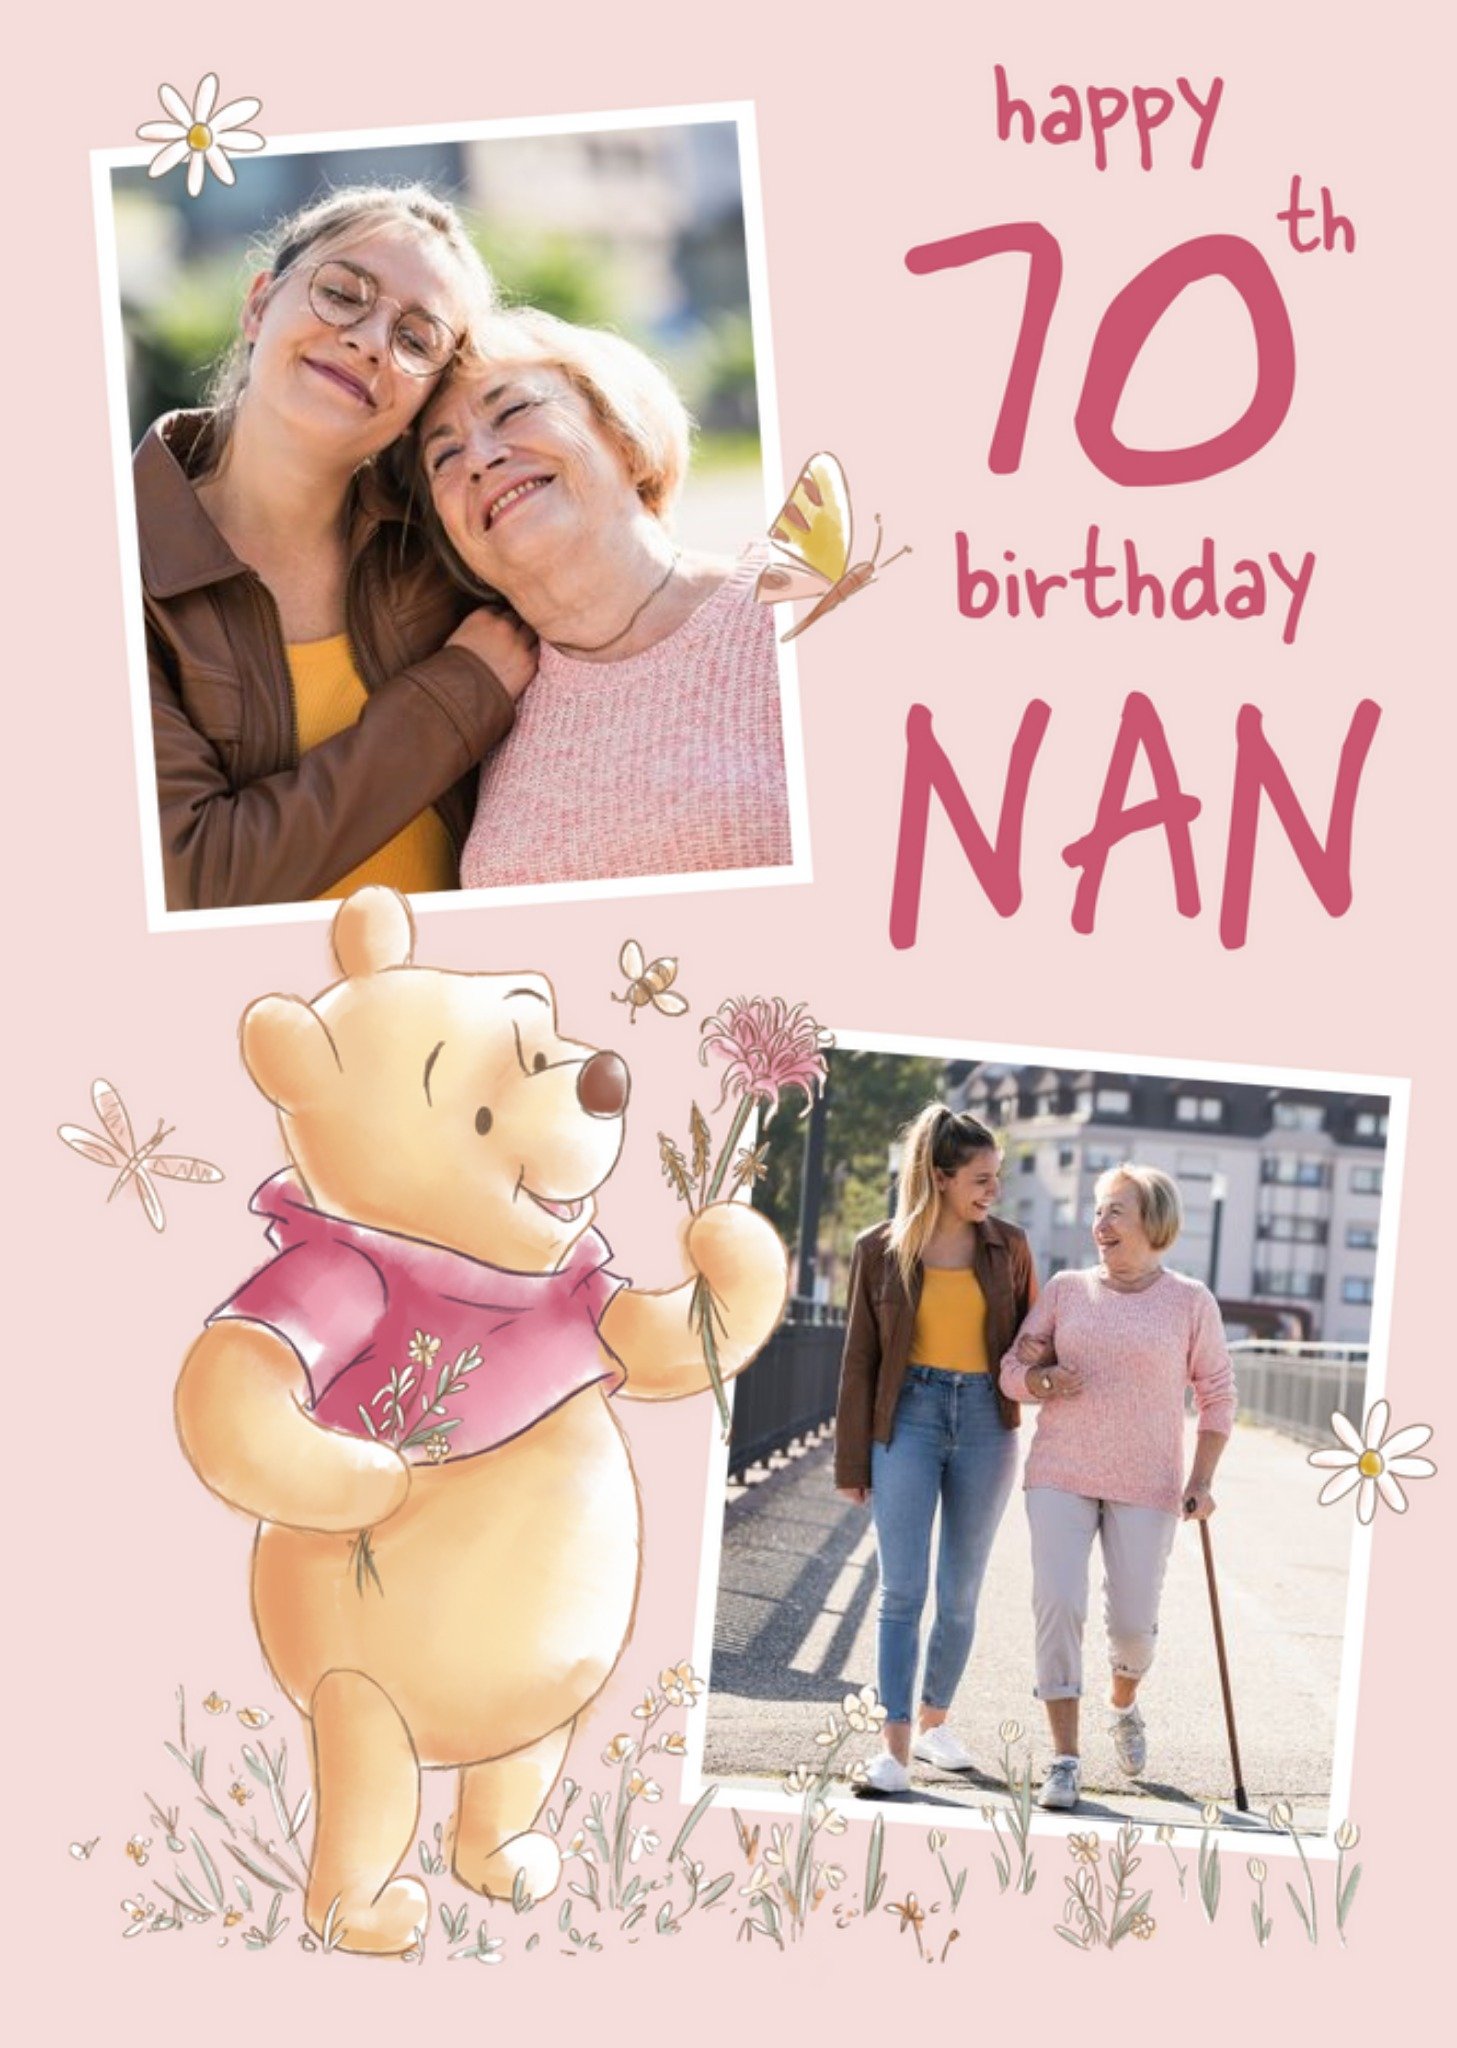 Cute Disney Winnie the Pooh Nan 70th Birthday Photo Upload Card Ecard